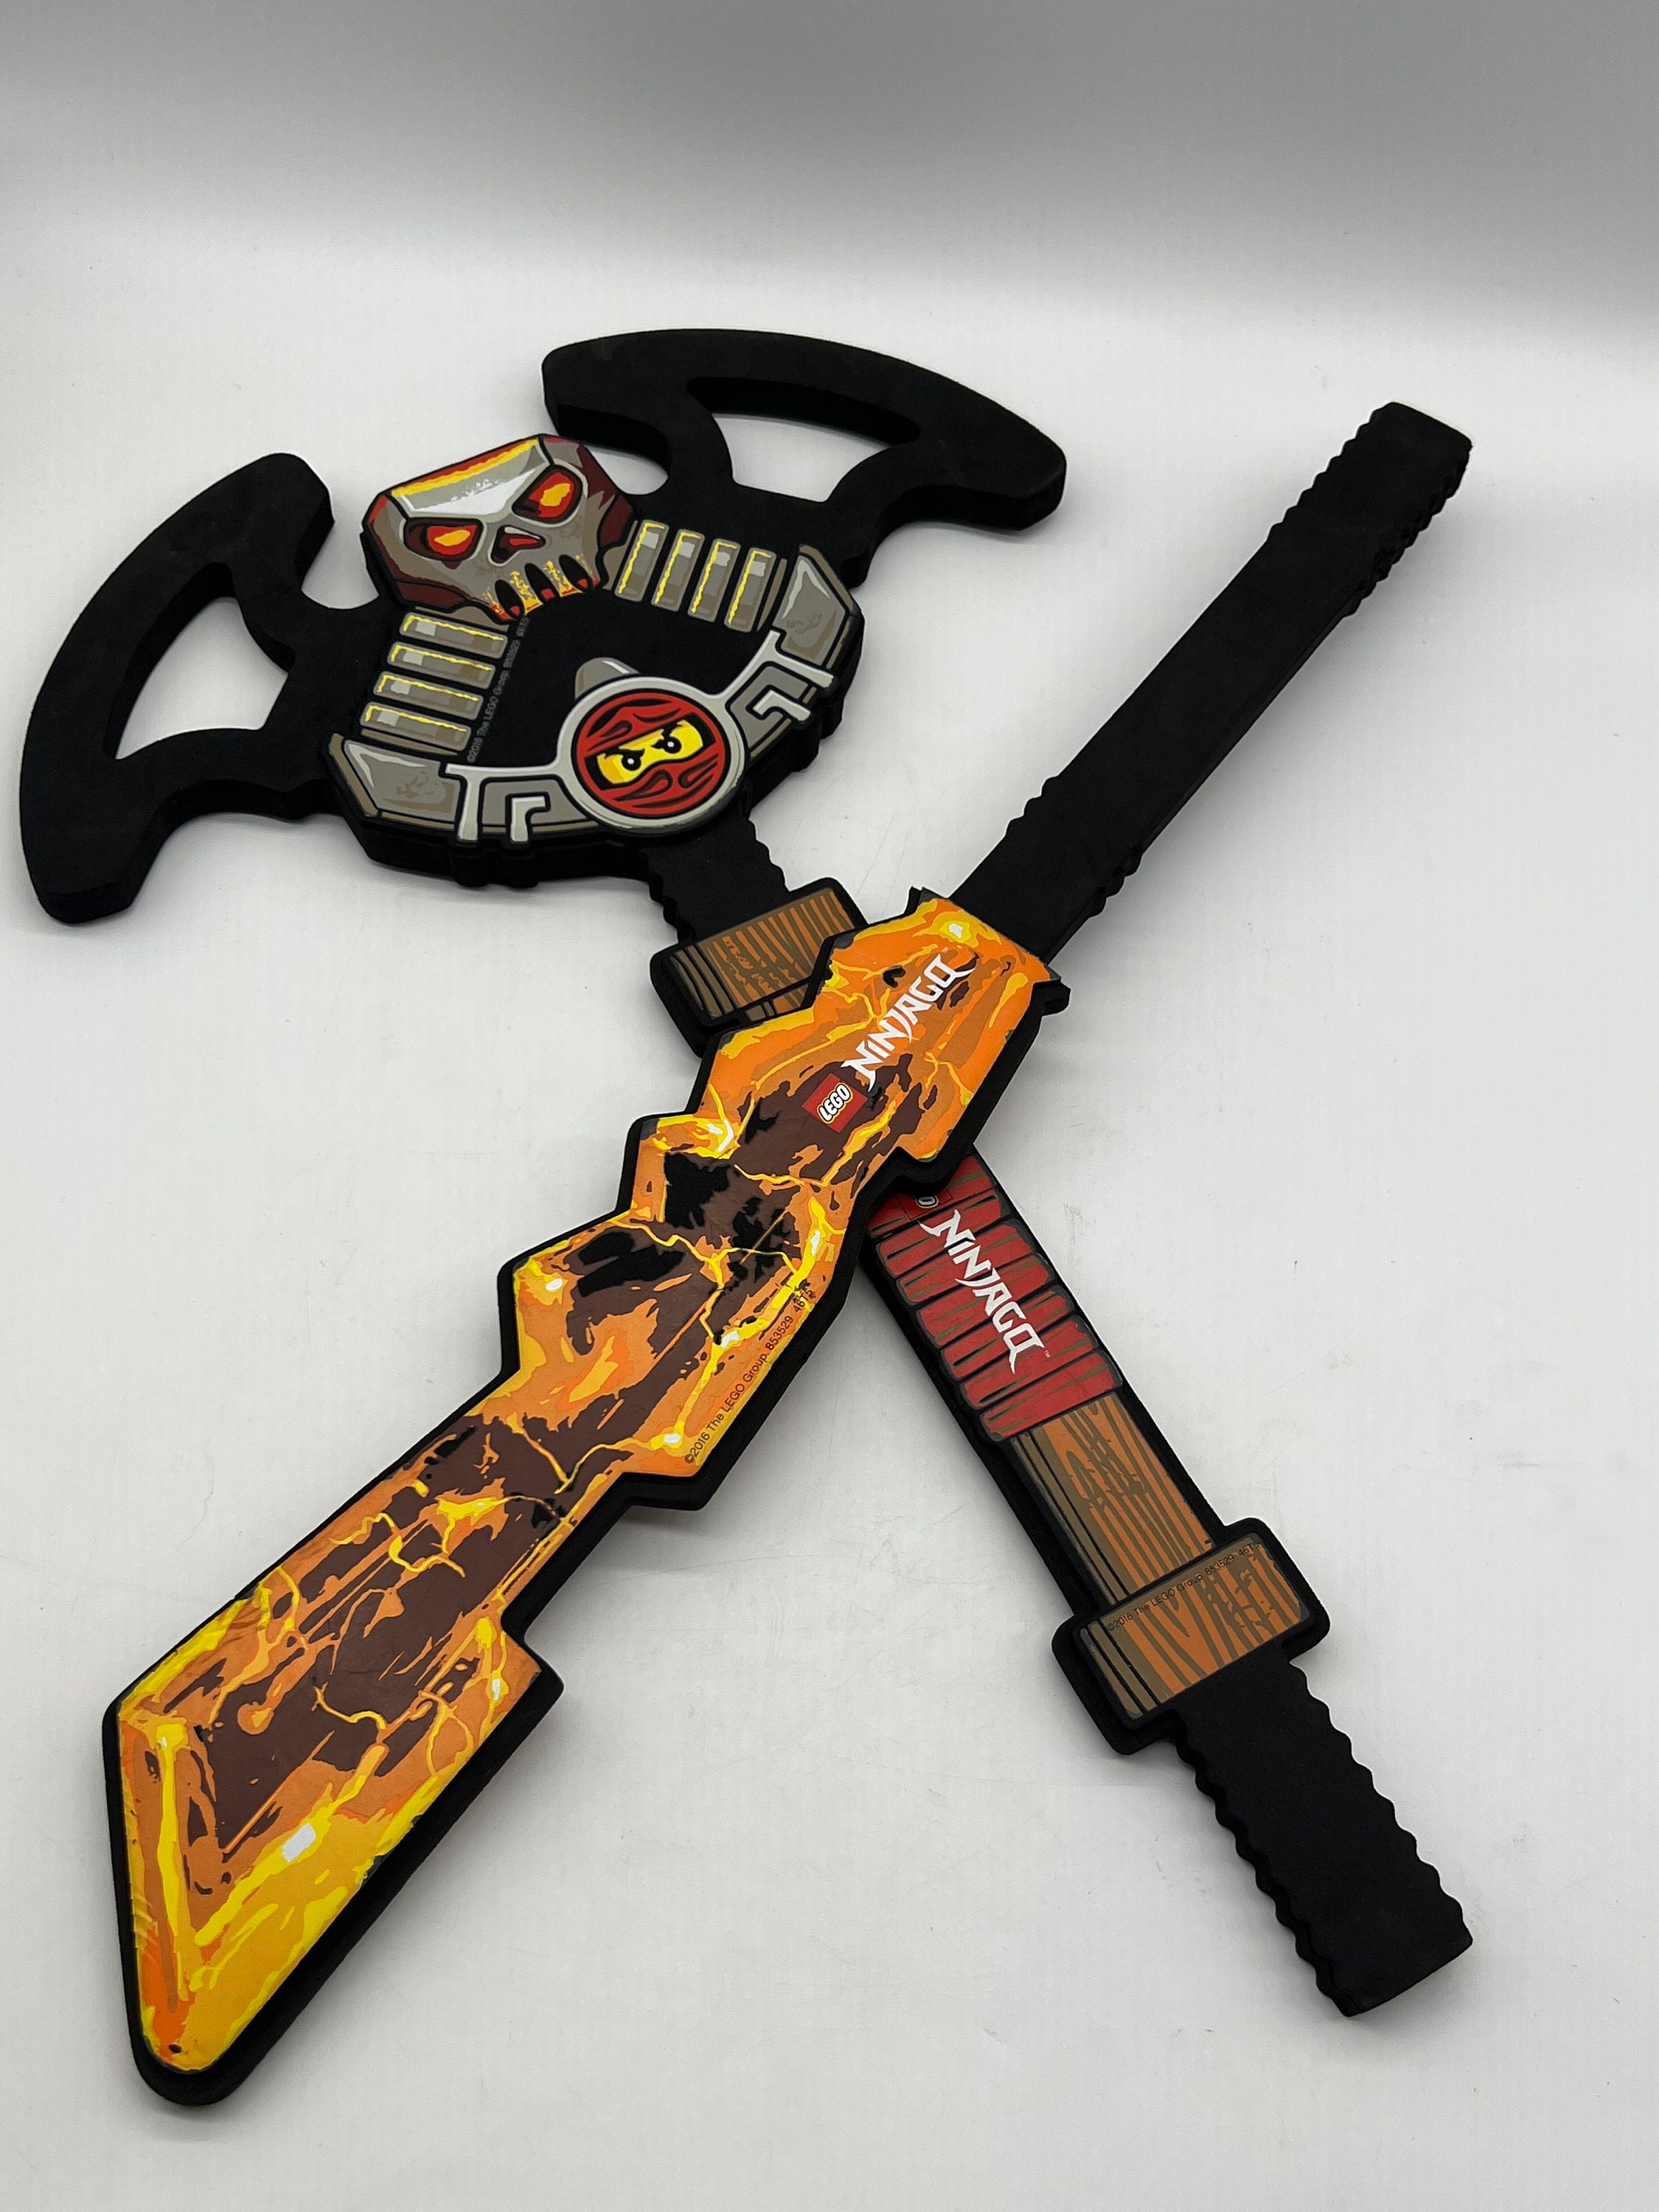 LEGO - Minifig, Weapon Ninjago Techno-Blade w/ Handle - PICK YOUR COLOR !!